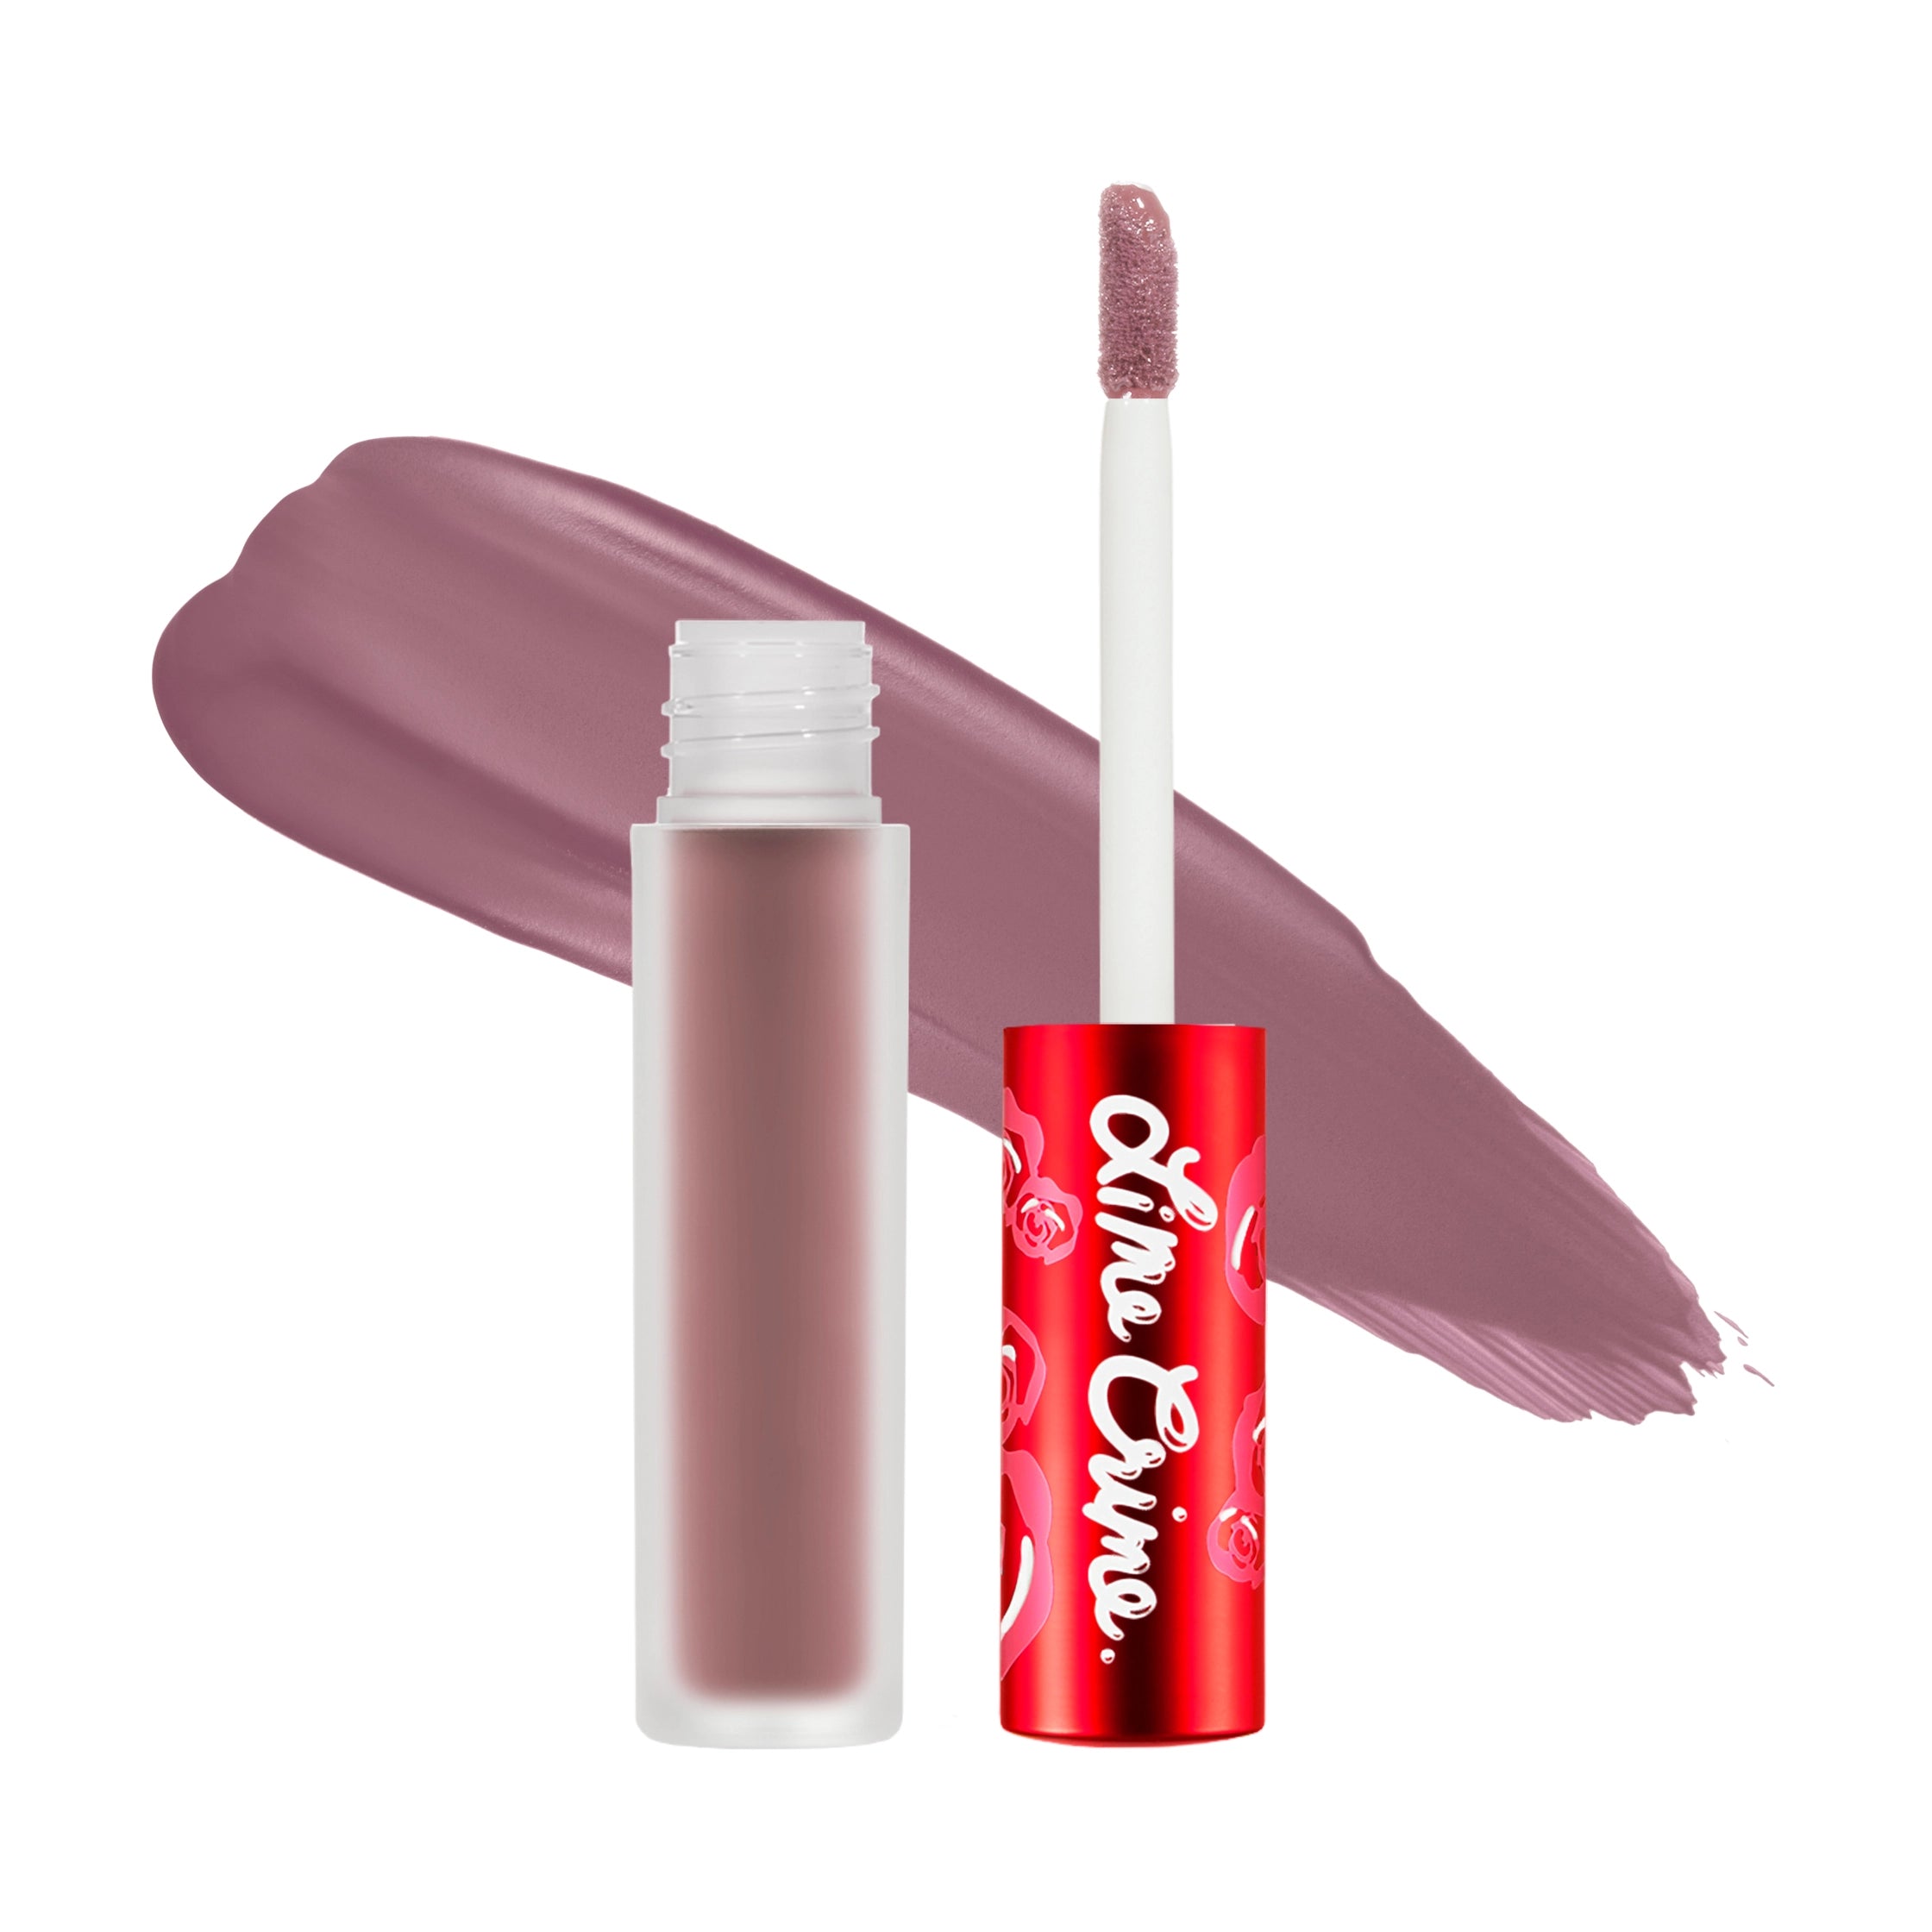 Velvetines Liquid Lipstick variant:Cashmere